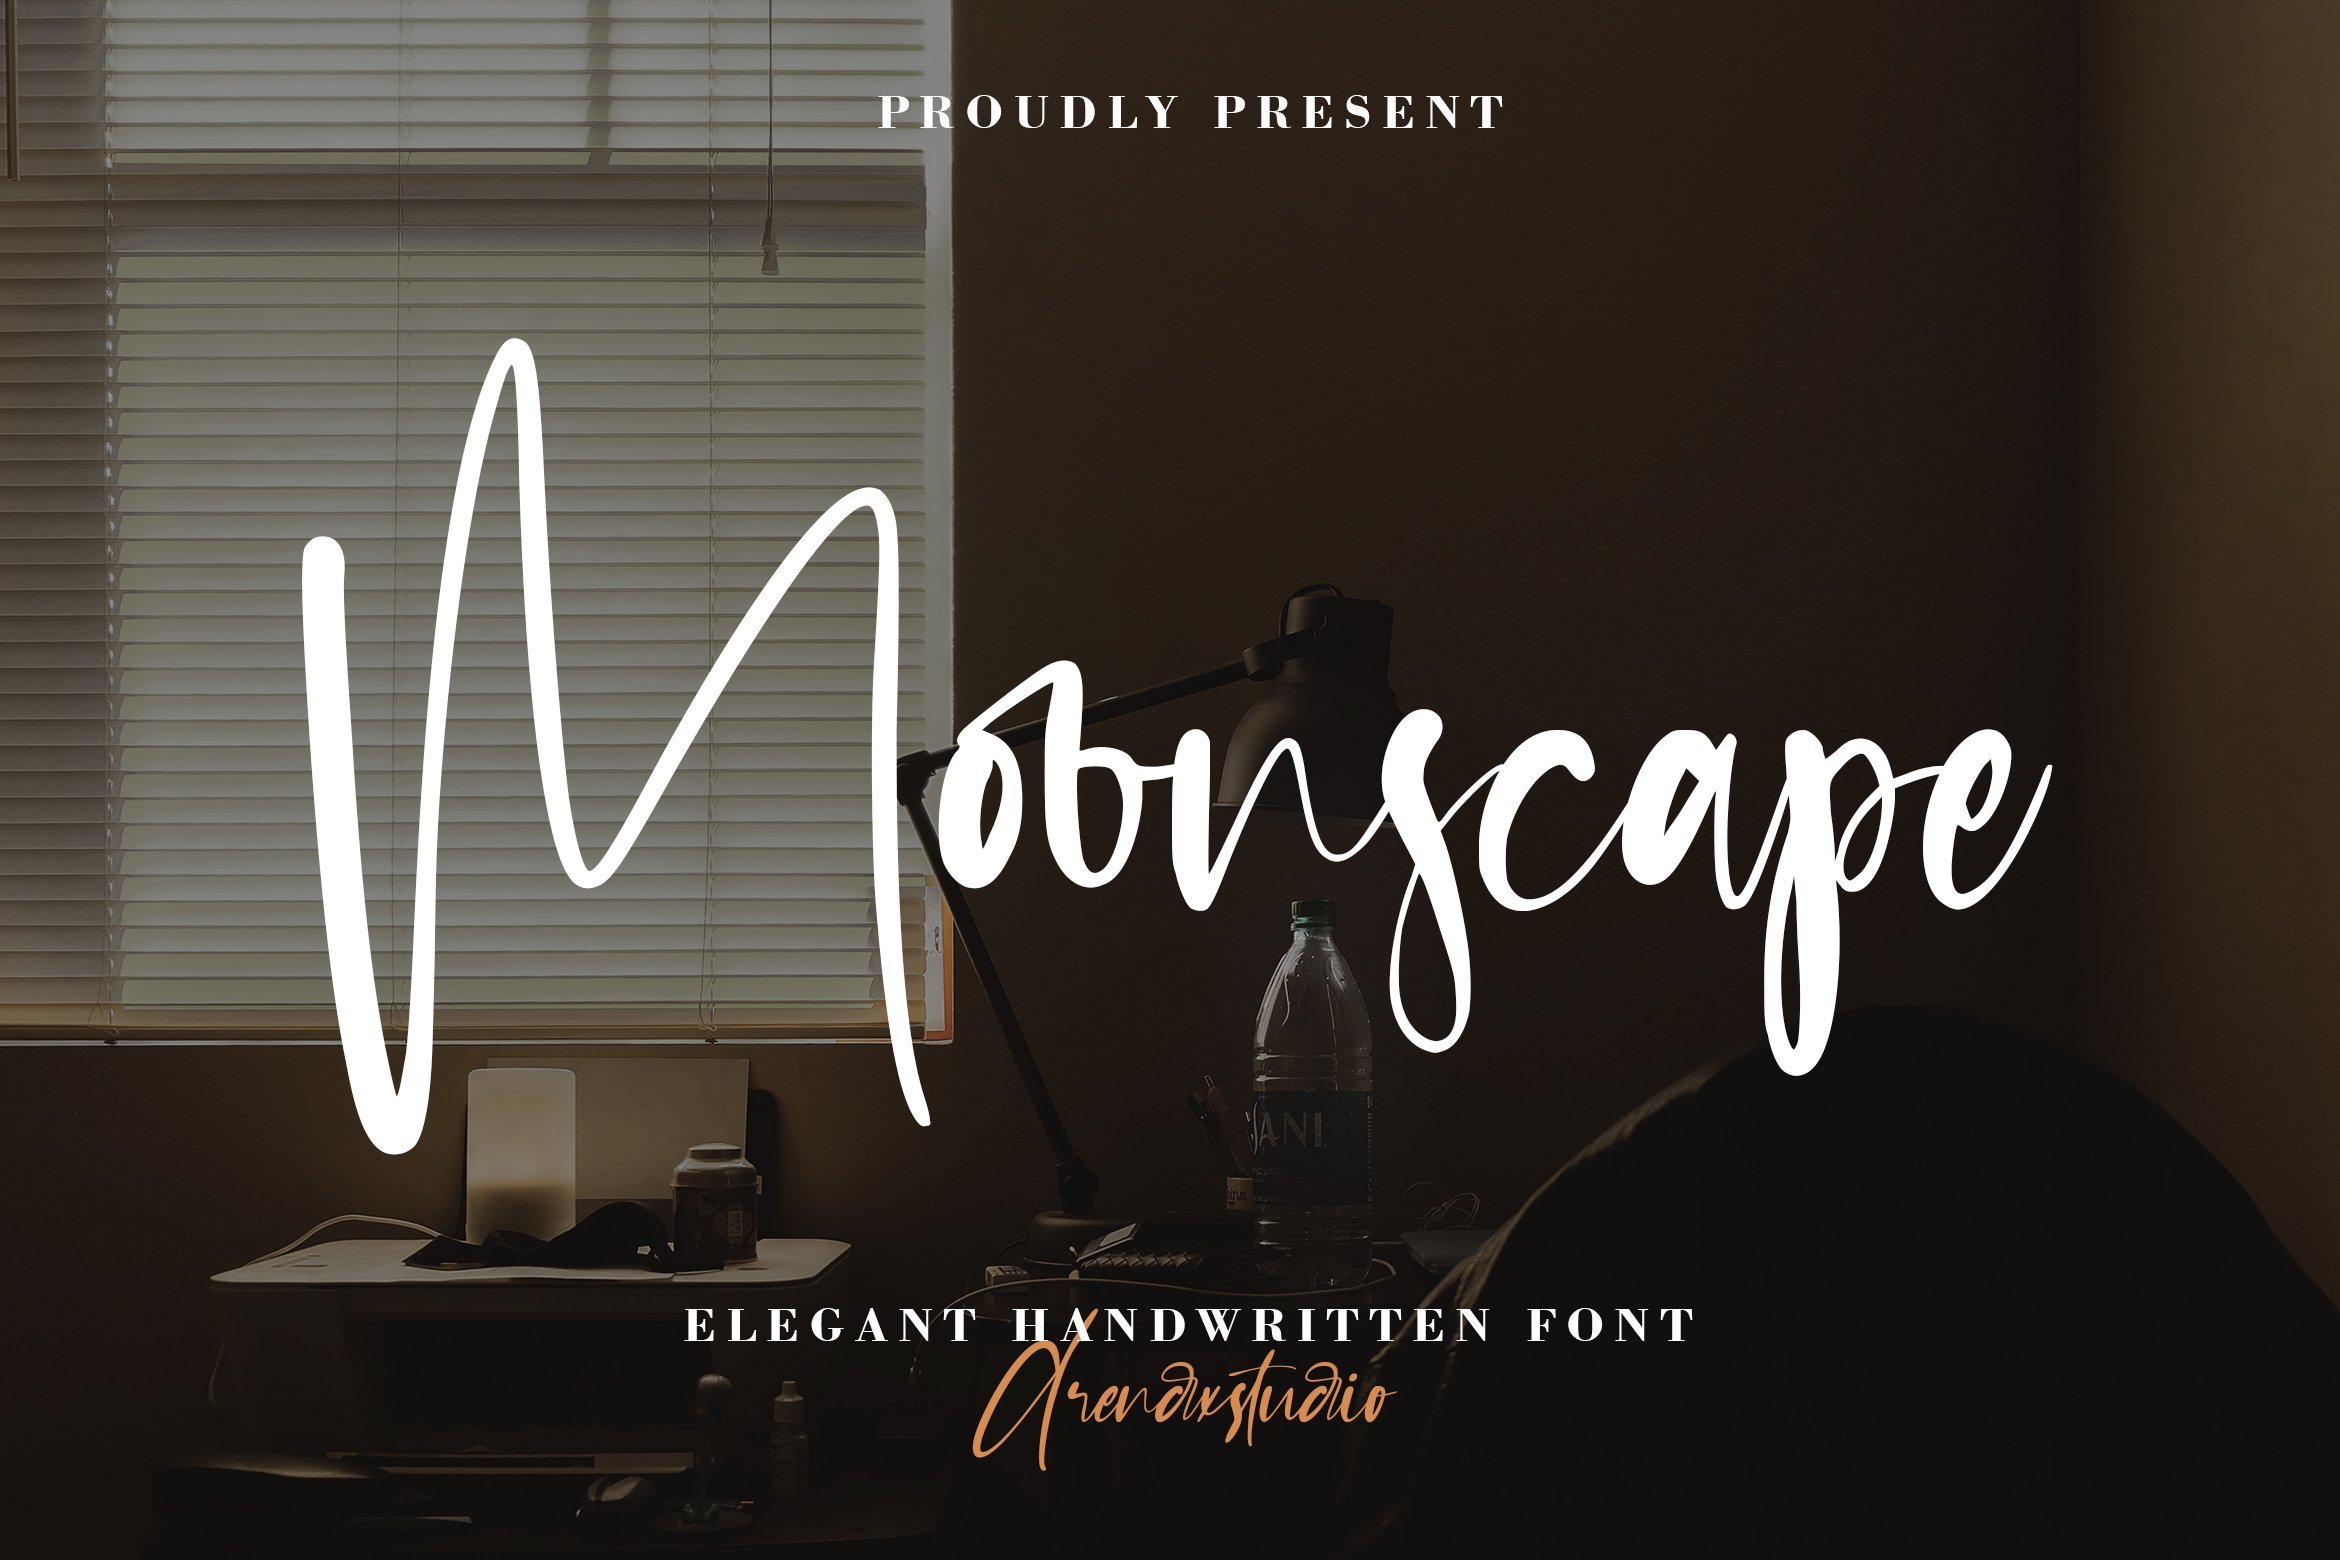 Moonscape - Elegant Handwritten Font cover image.